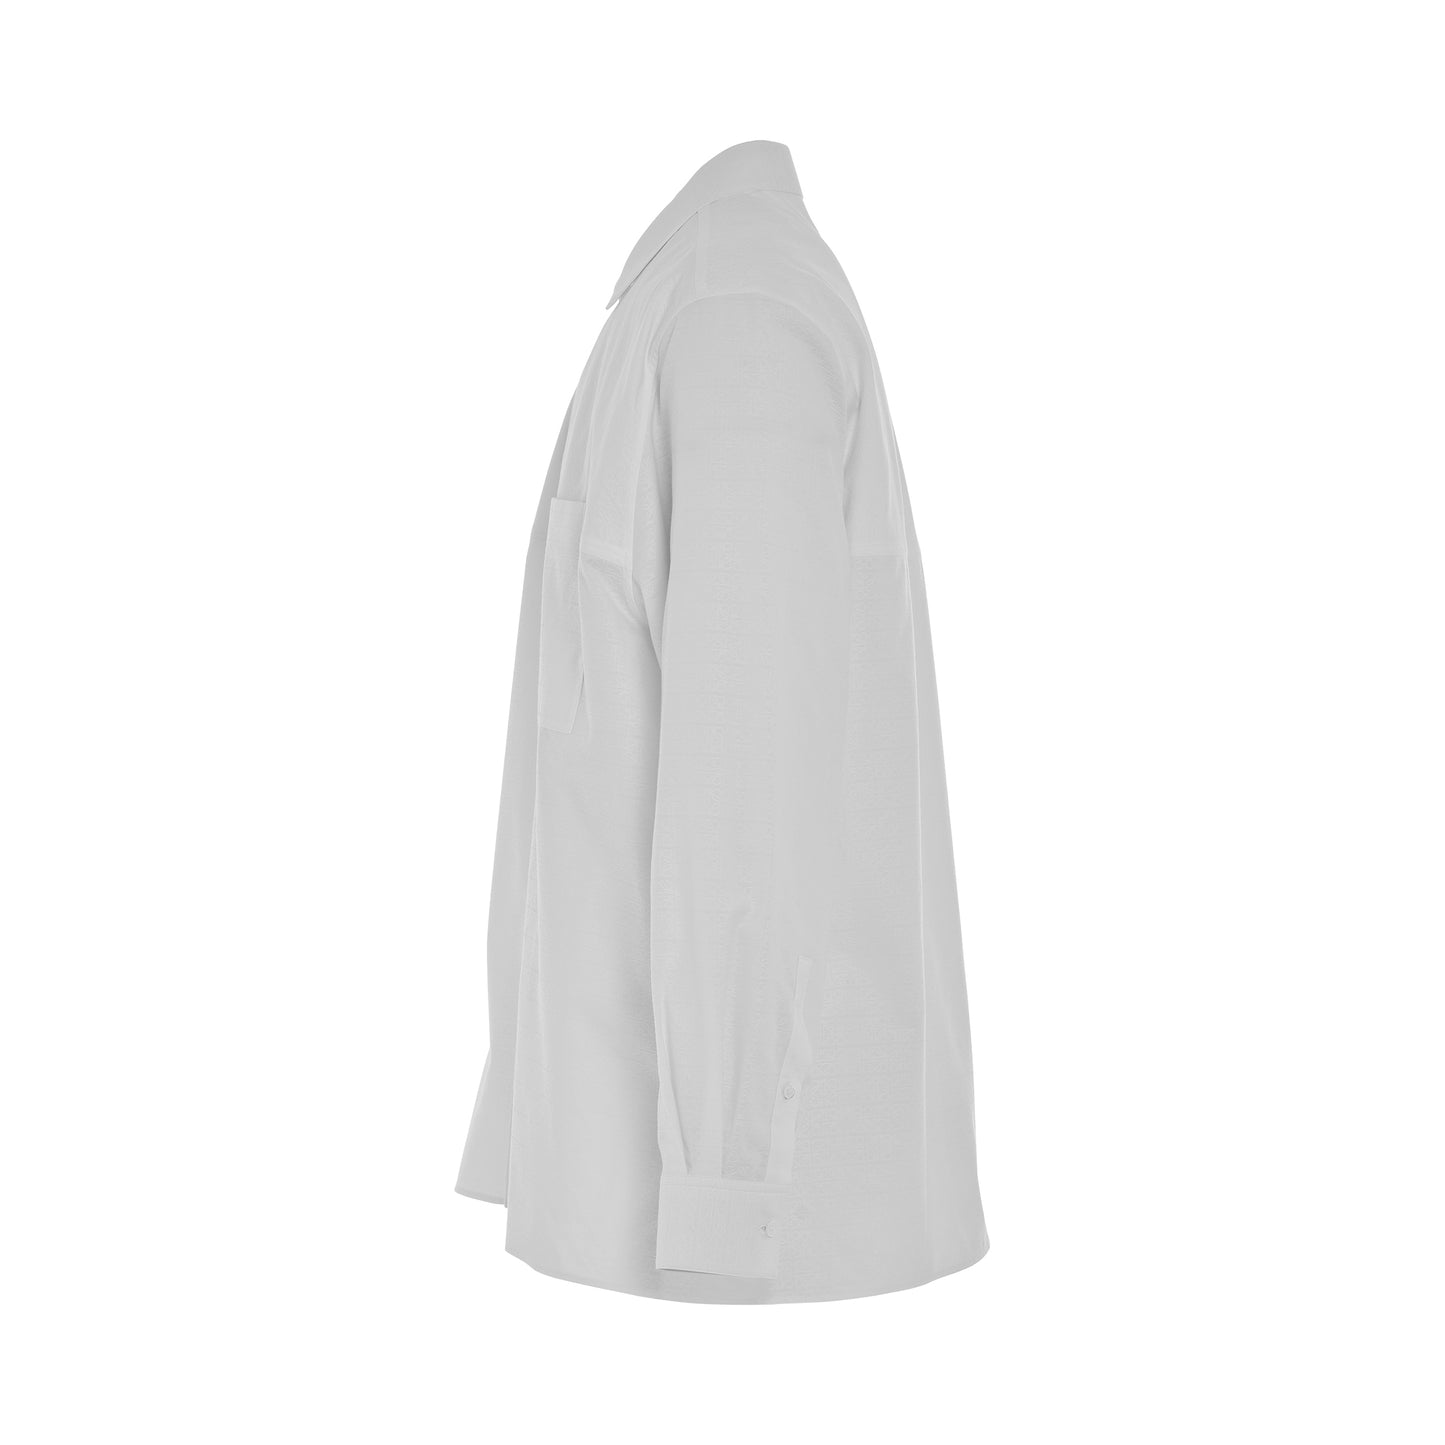 Anagram Jacquard Shirt in White